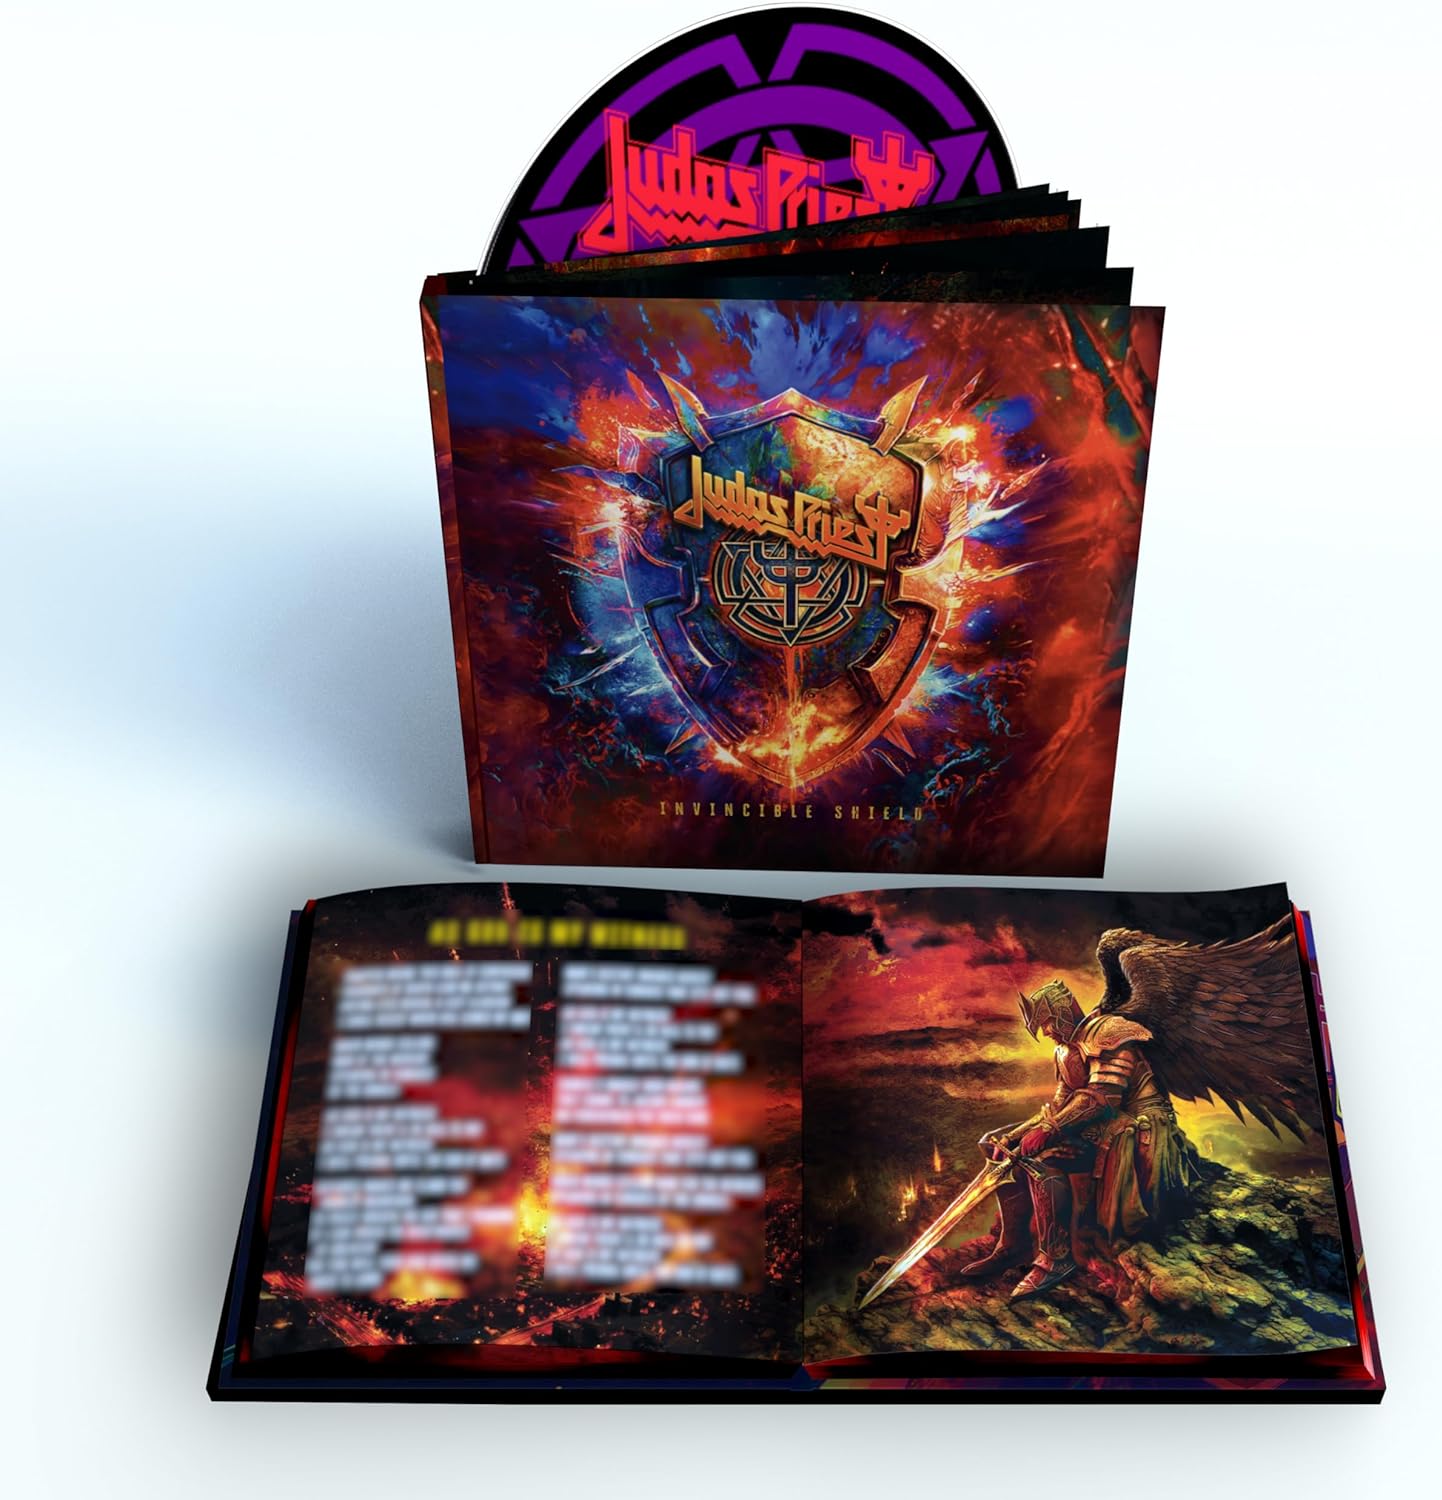 CD - Judas Priest - Invincible Shield (DLX)